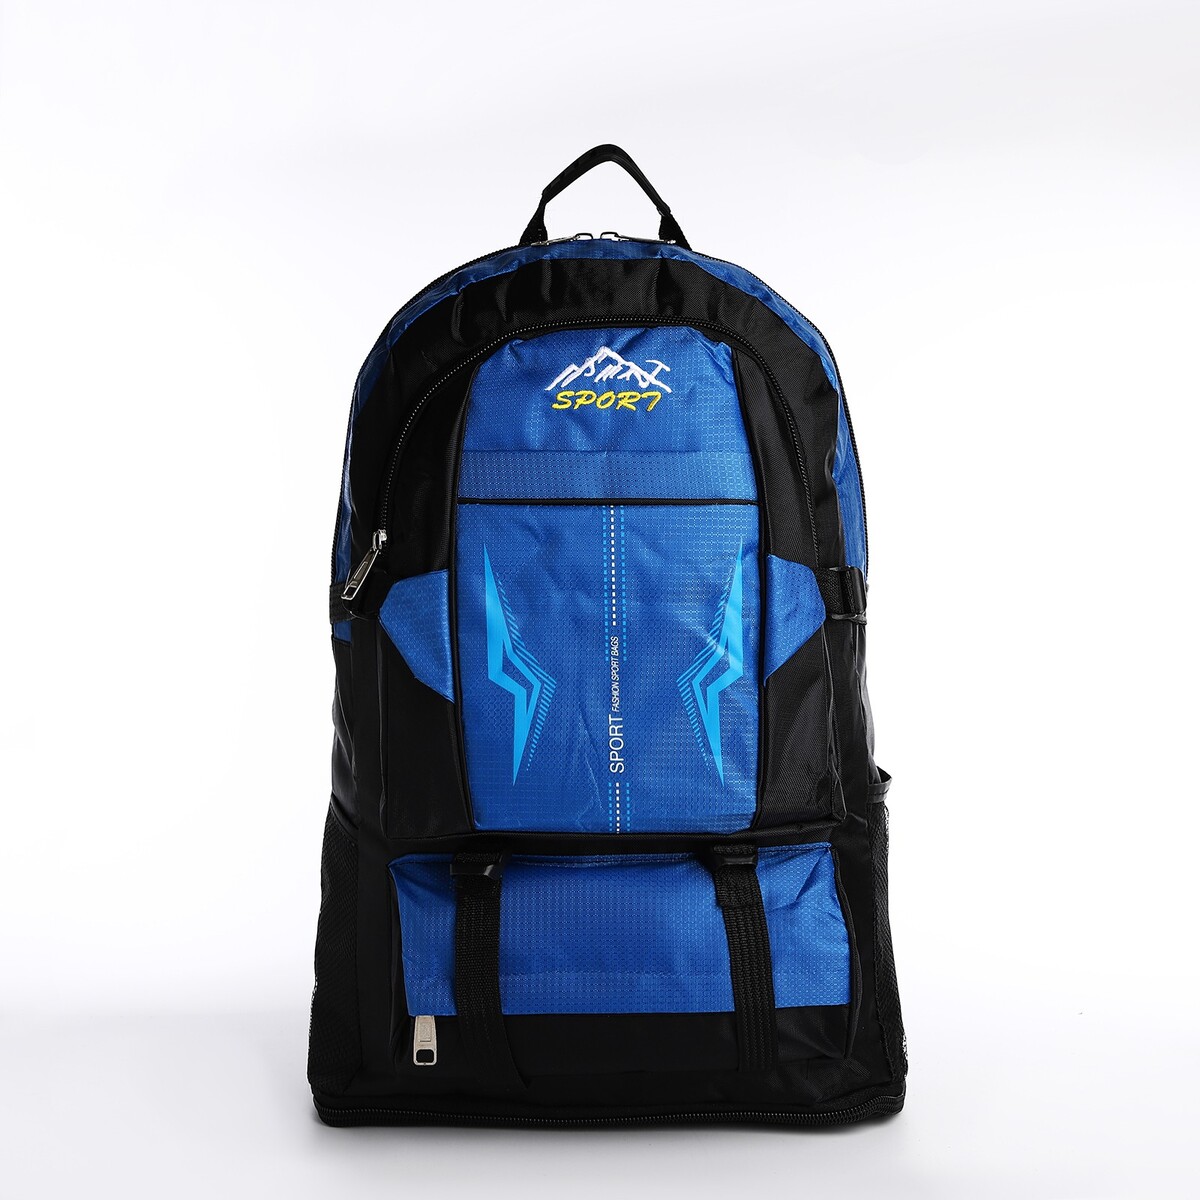 Рюкзак на молнии с увеличением, 65л, 4 наружных кармана, цвет синий рюкзак детский на молнии 3 наружных кармана синий